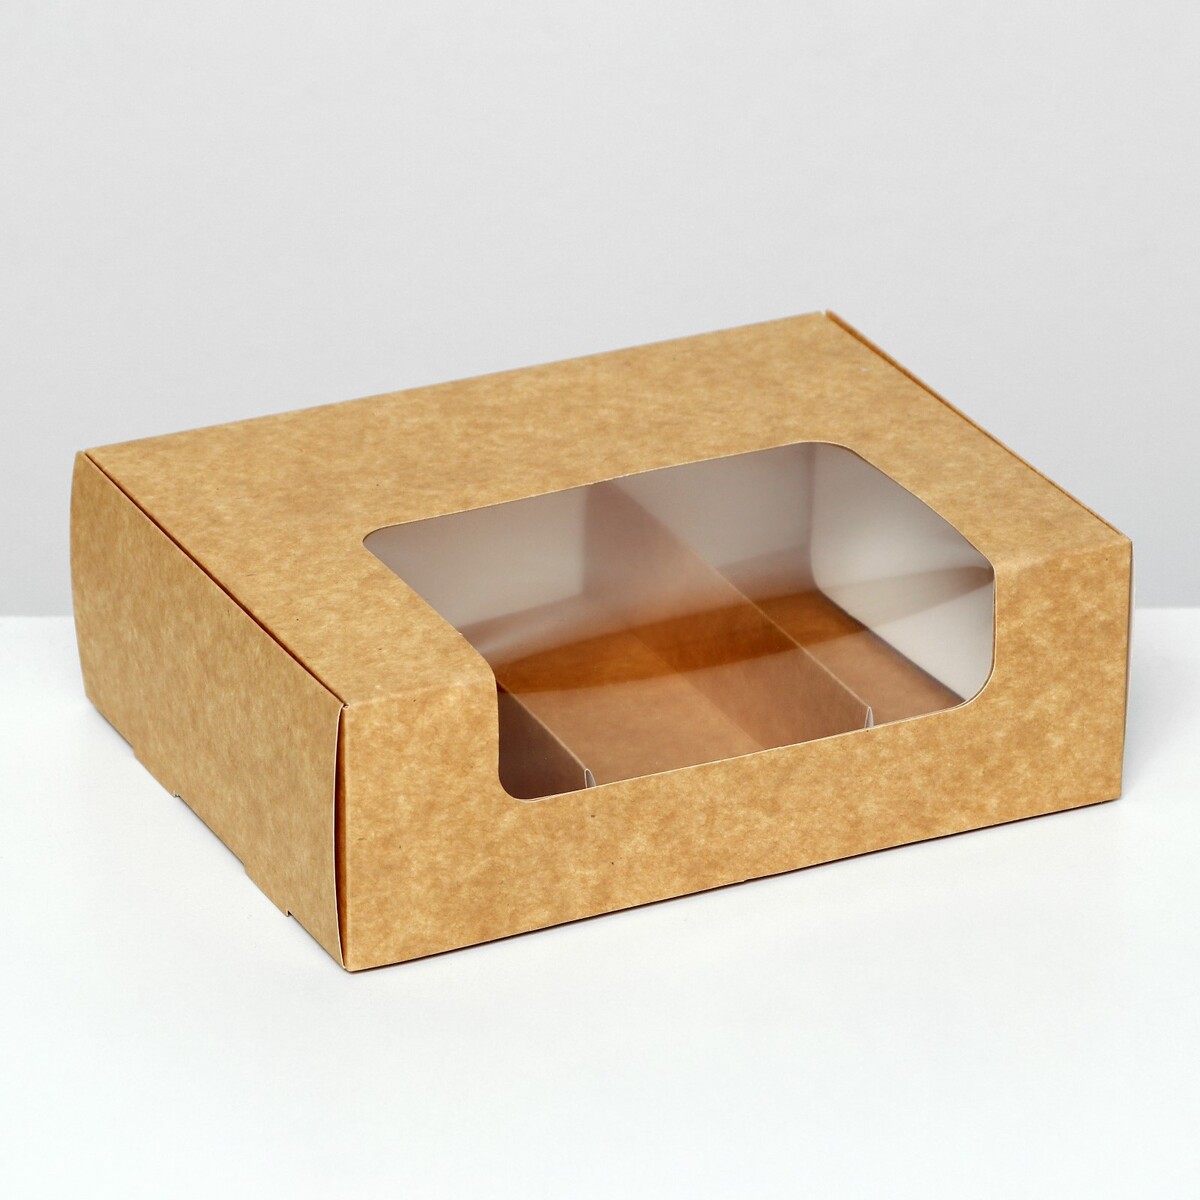 Коробка складная, под 3 эклера, крафт, 20 x 15 x 6 см коробка складная под 20 конфет крафт 17 7 х 22 х 3 5 см